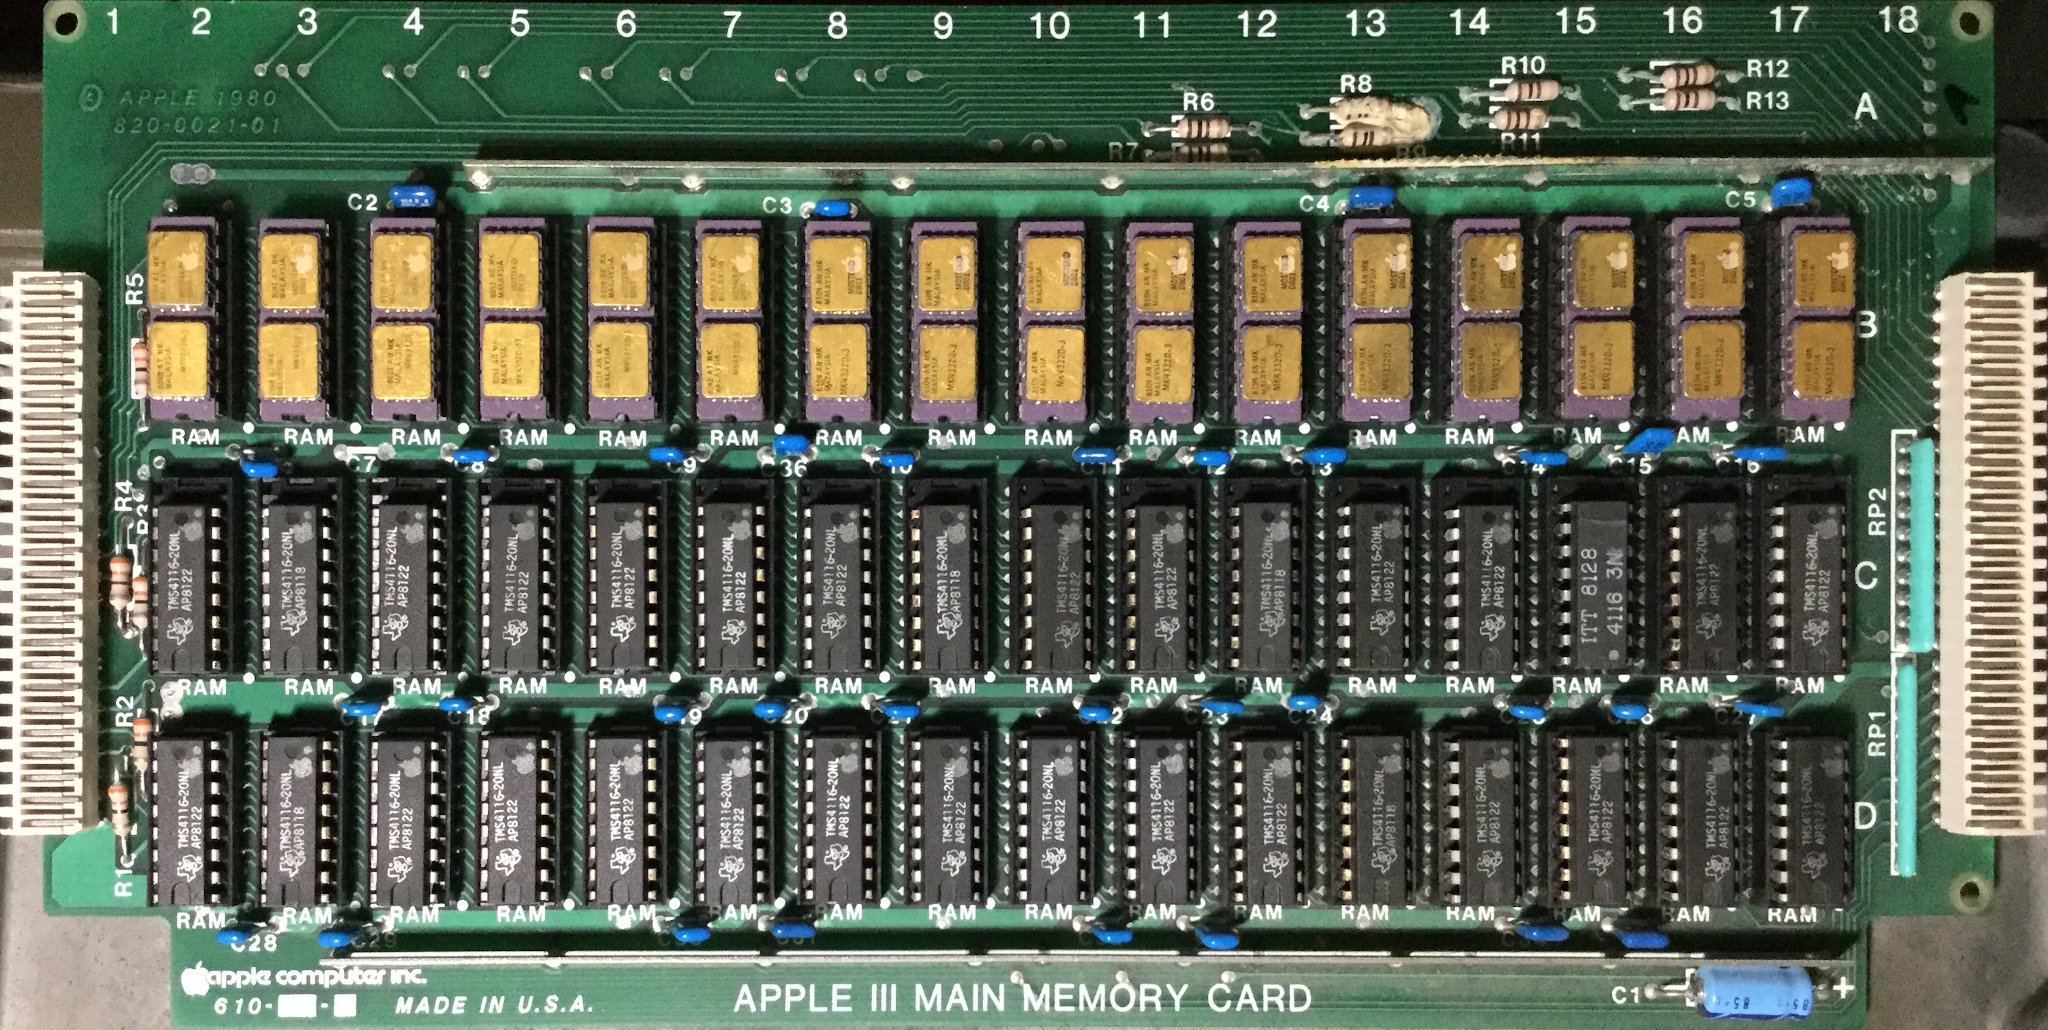 Apple III main memory card, 12V RAM